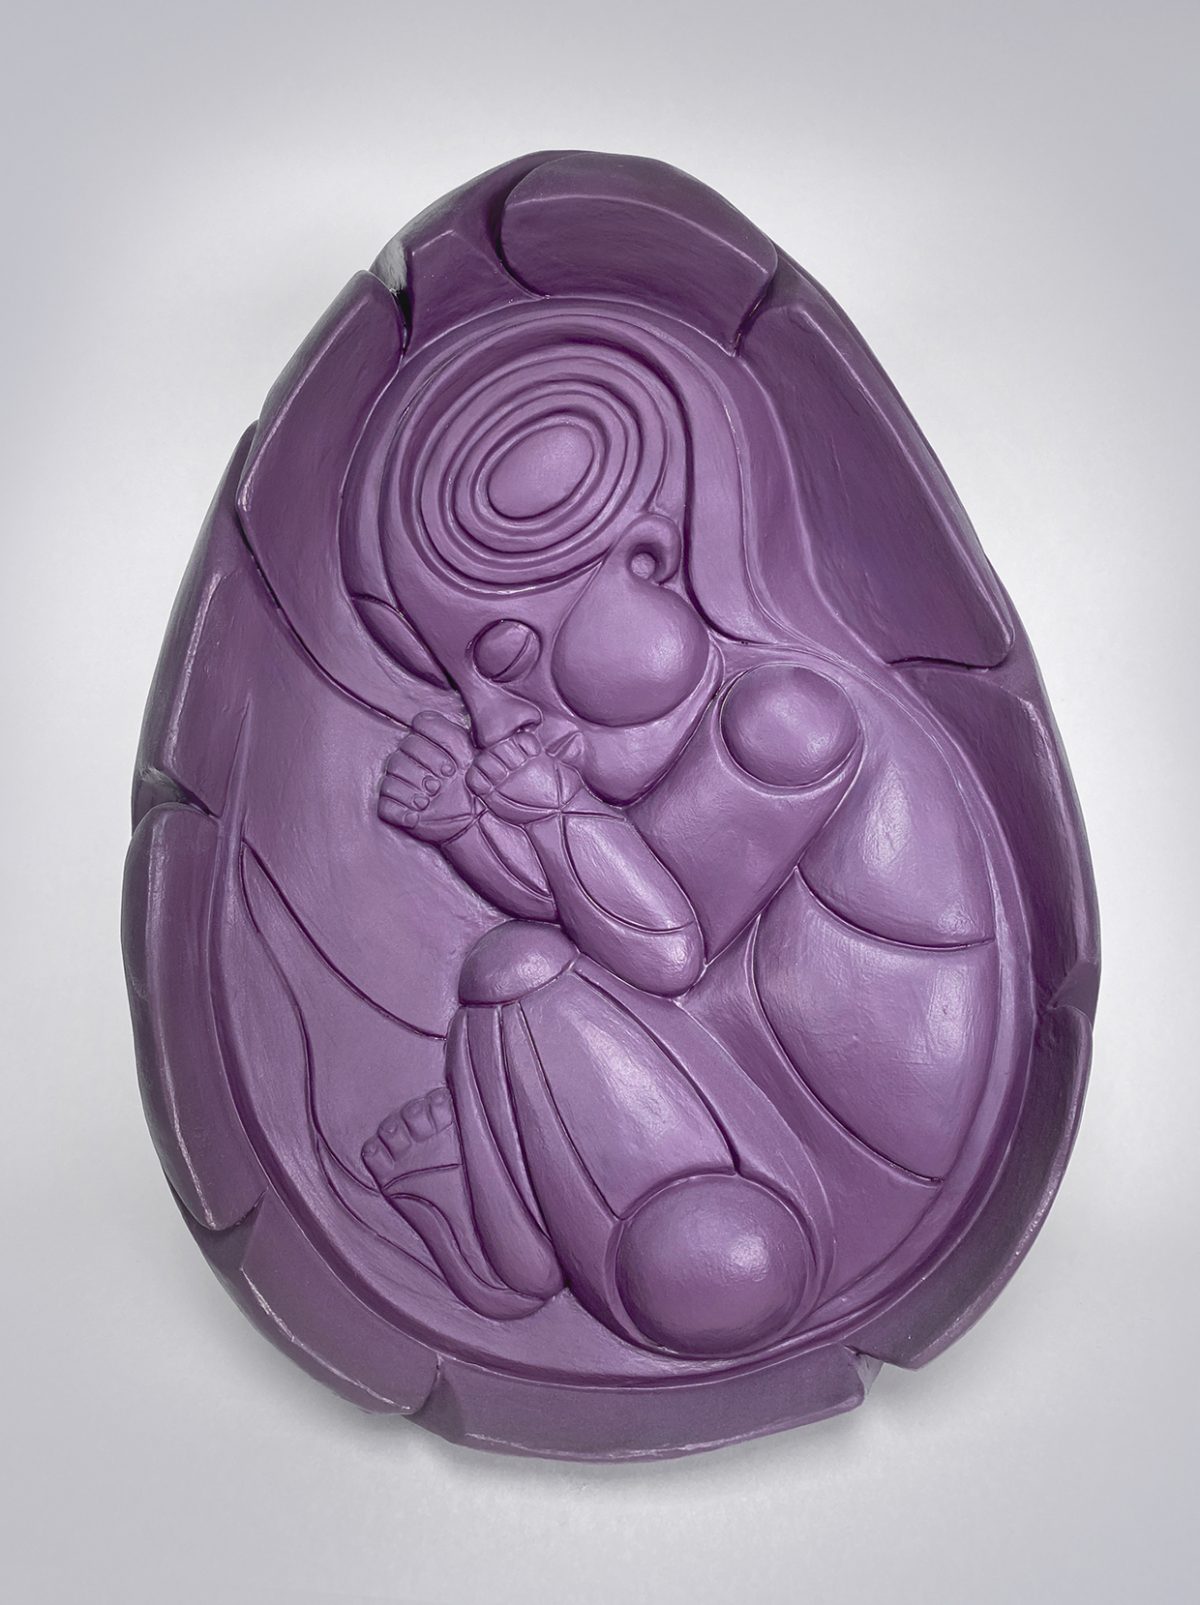 ПОСПЕХОВА ЕЛЕНА Скульптура ЗМЕЕБОРЕЦ пурпур / POSPEKHOVA ELENA Sculpture DRAGON SLAYER purple